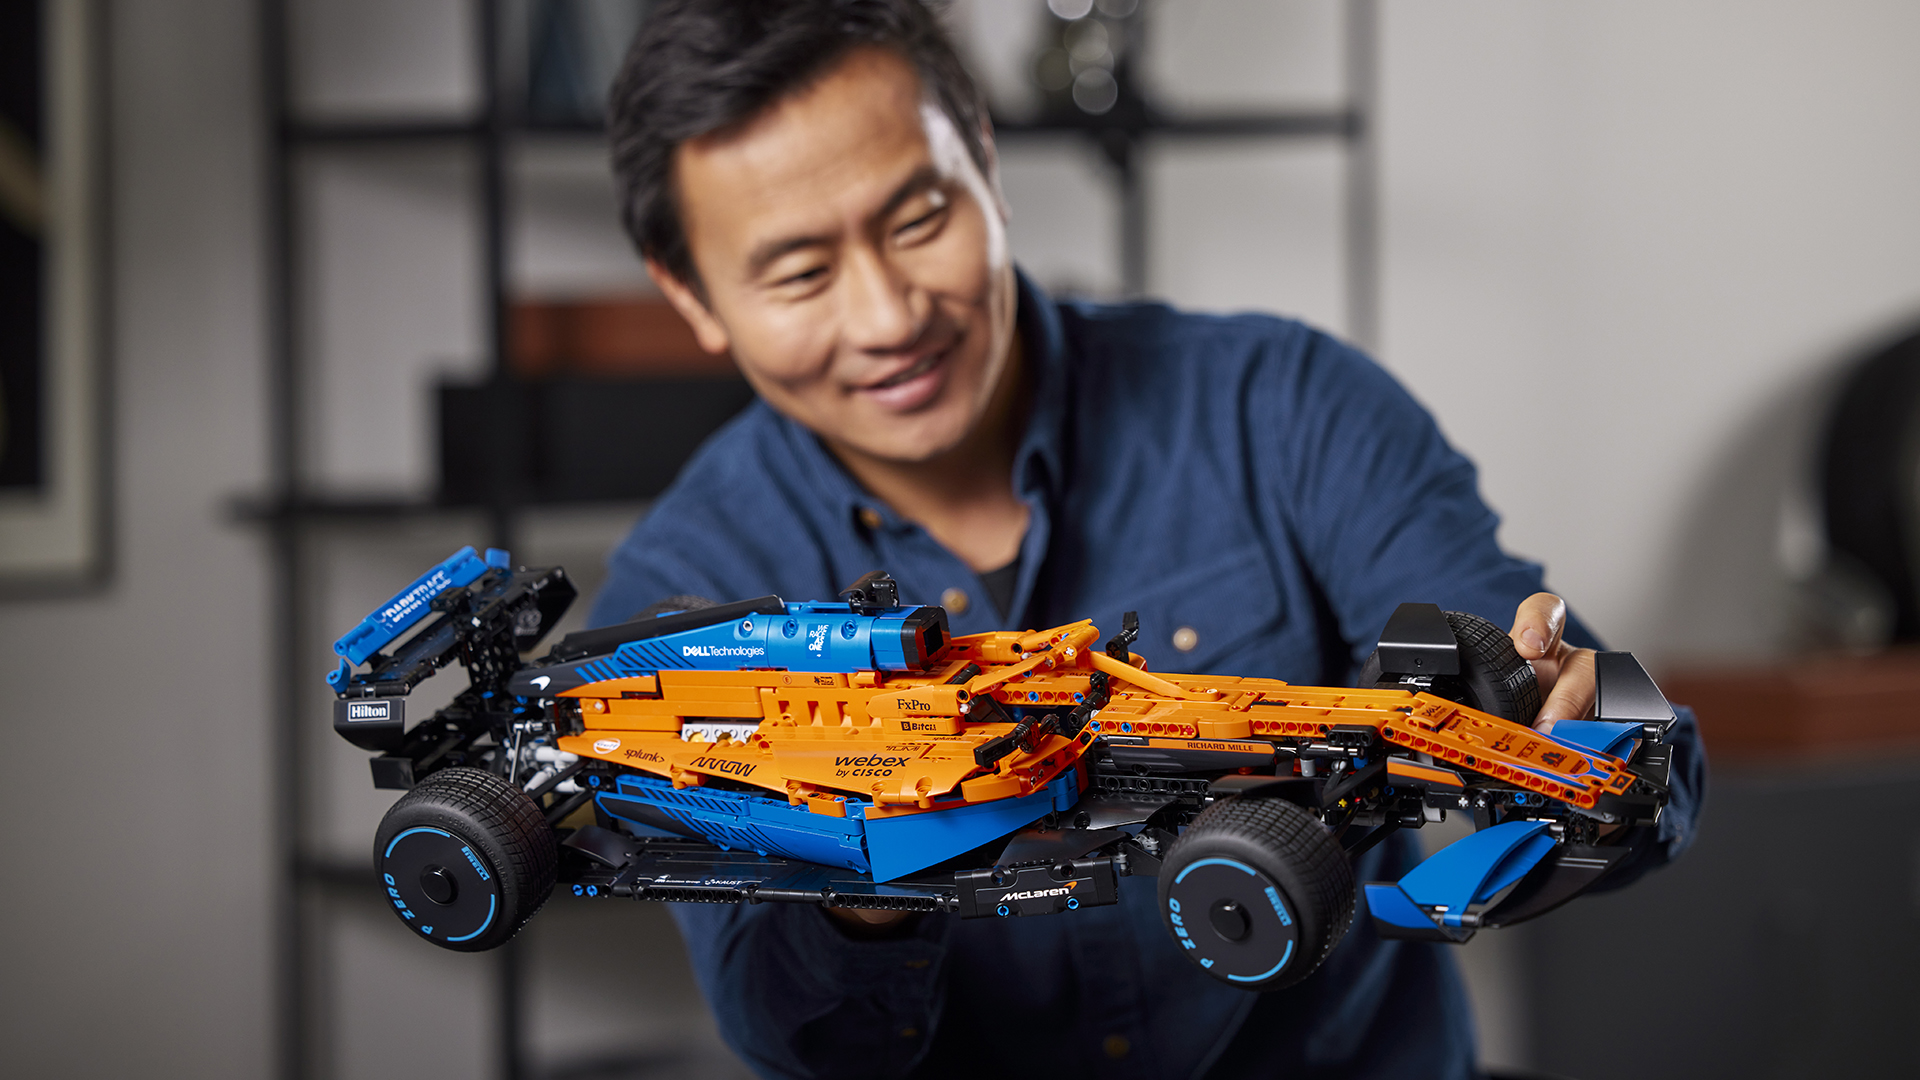 Lego Technic McLaren F1 set promises a glimpse at the 2022 McLaren car